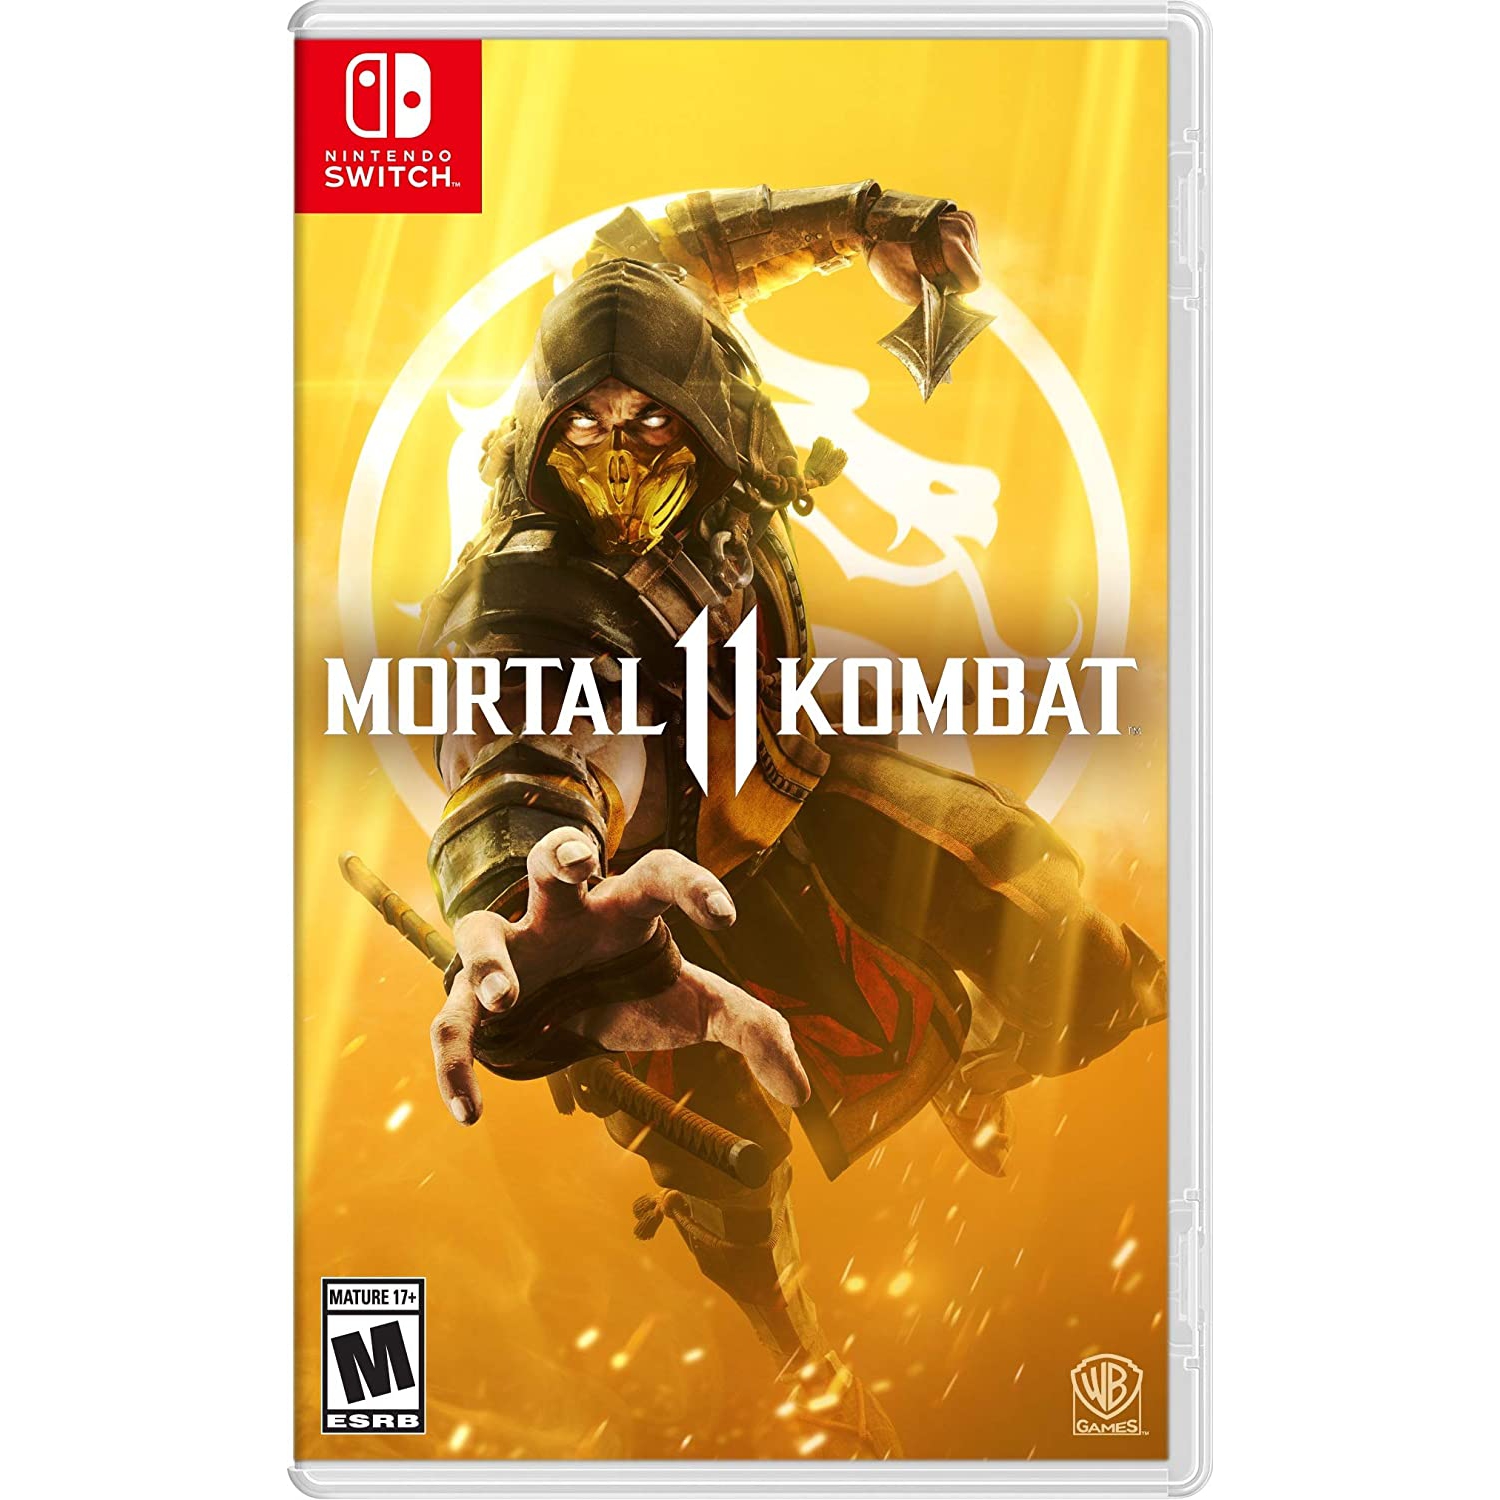 Mortal Kombat 11 Nintendo Switch Games and Software - Standard Edition